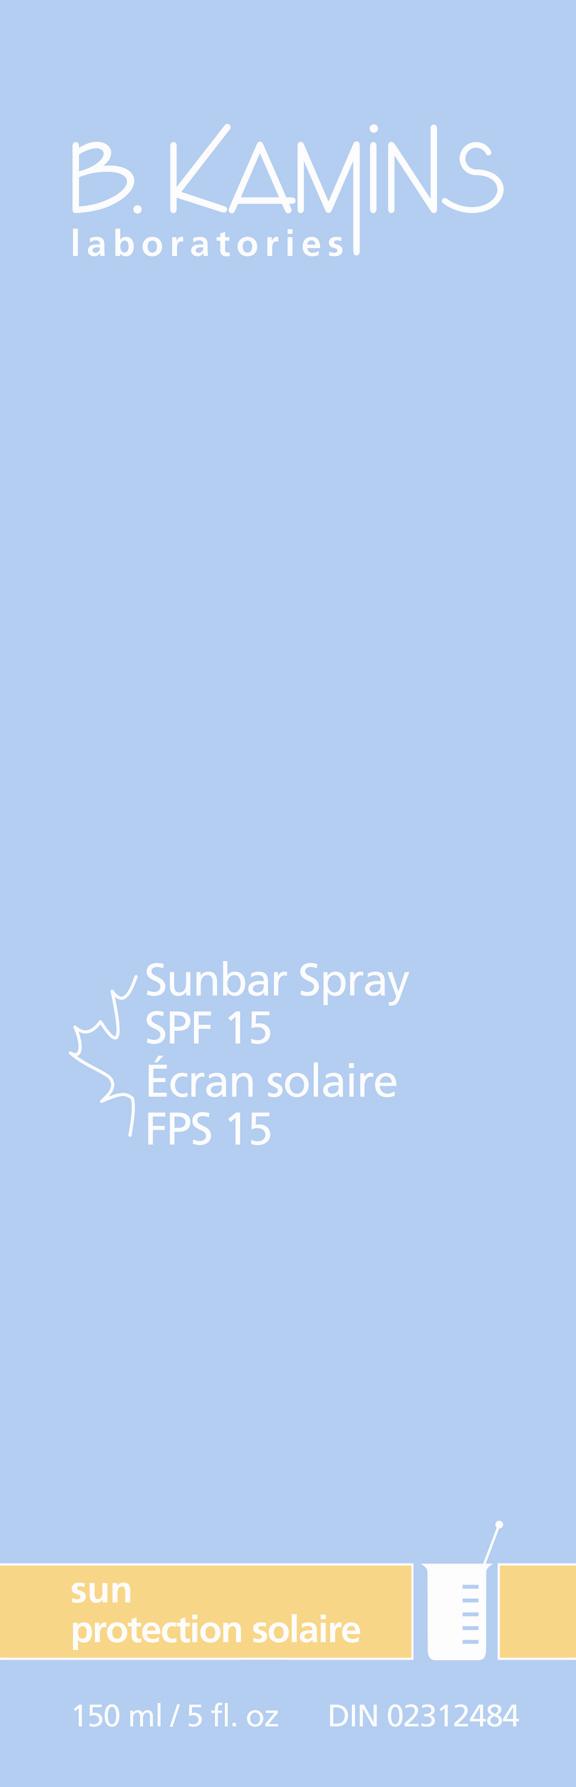 Sunbar Spray SPF front panel image